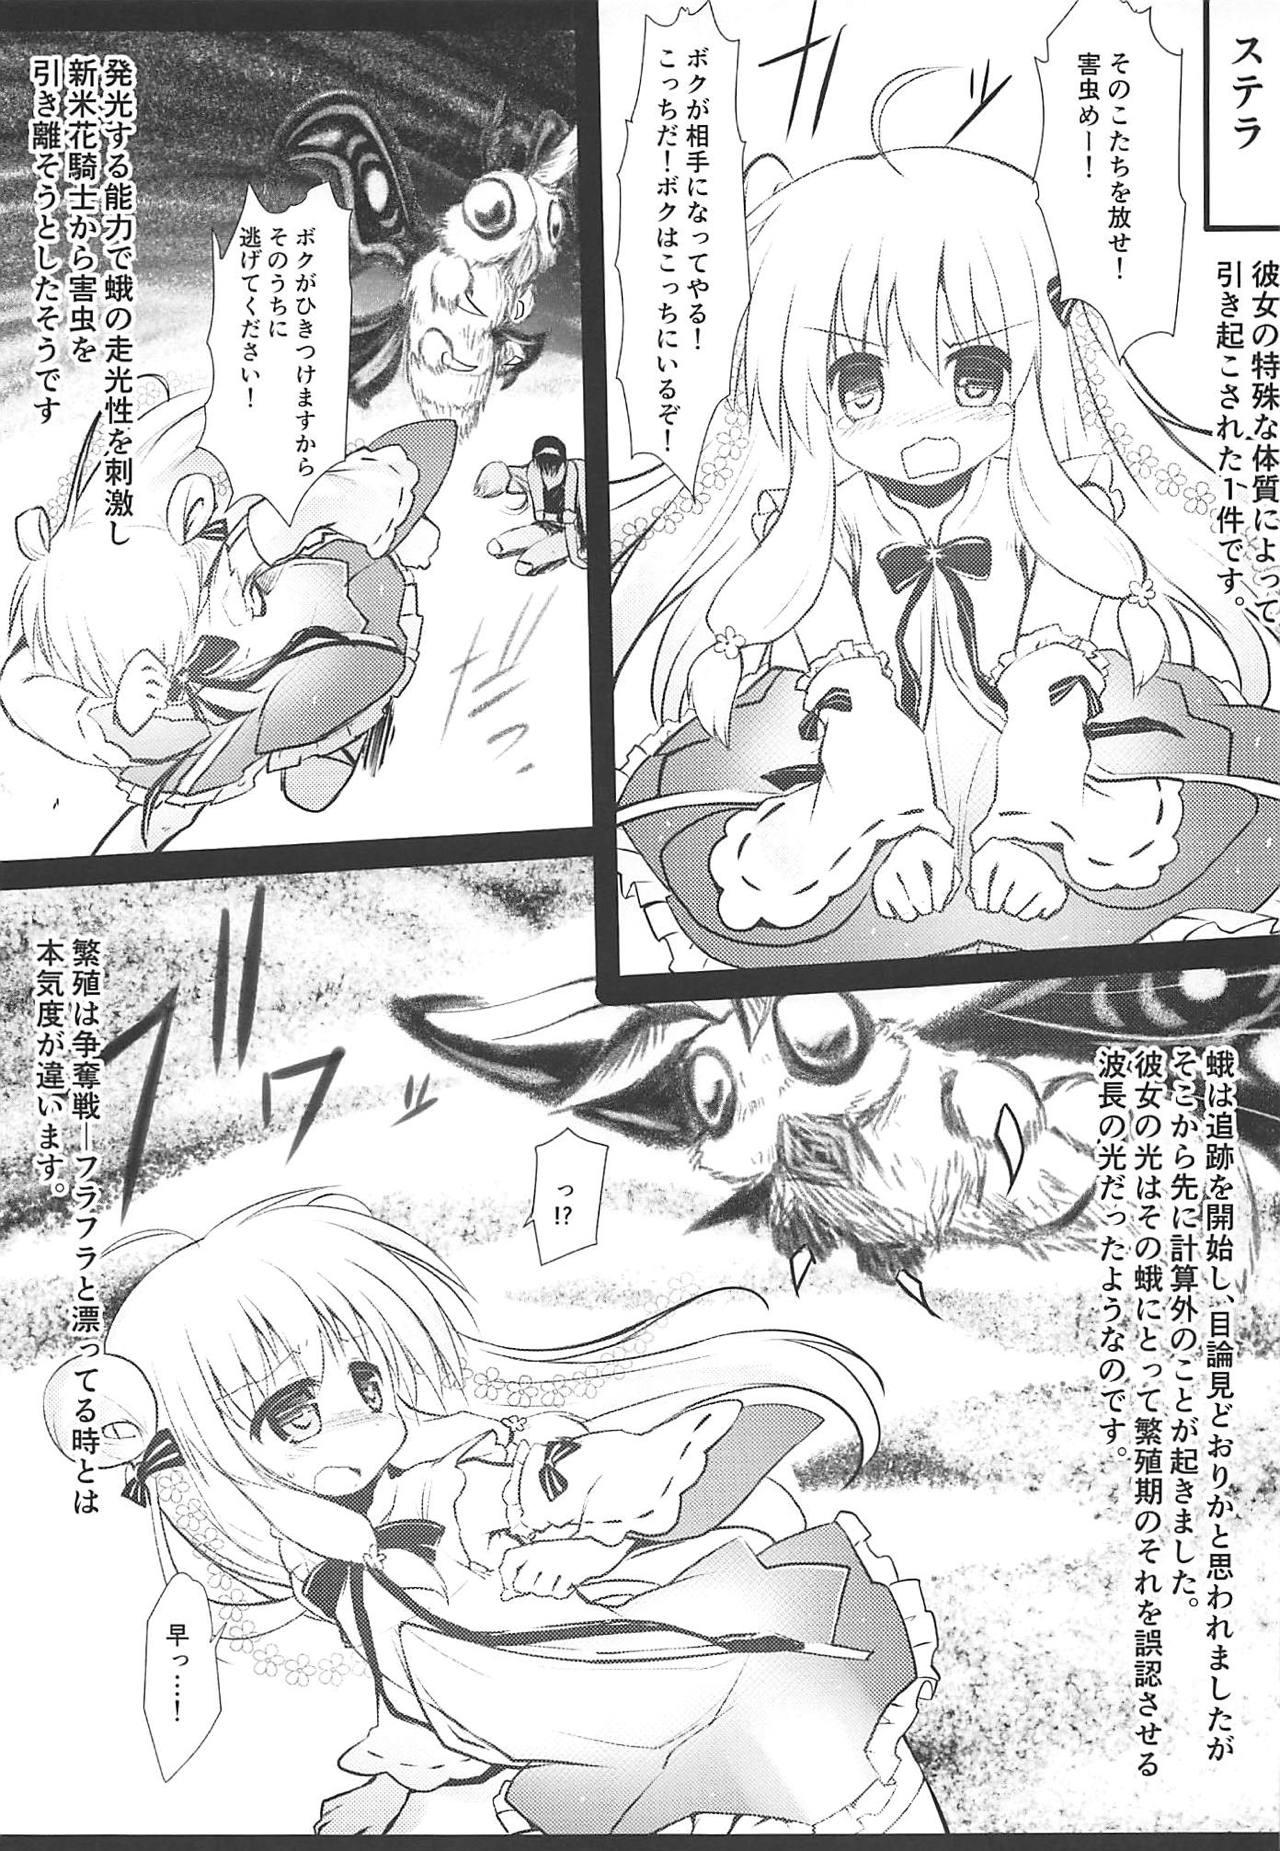 Nurumassage Gaichuu Higai Houkokusho File 3 - Flower knight girl Bedroom - Page 4